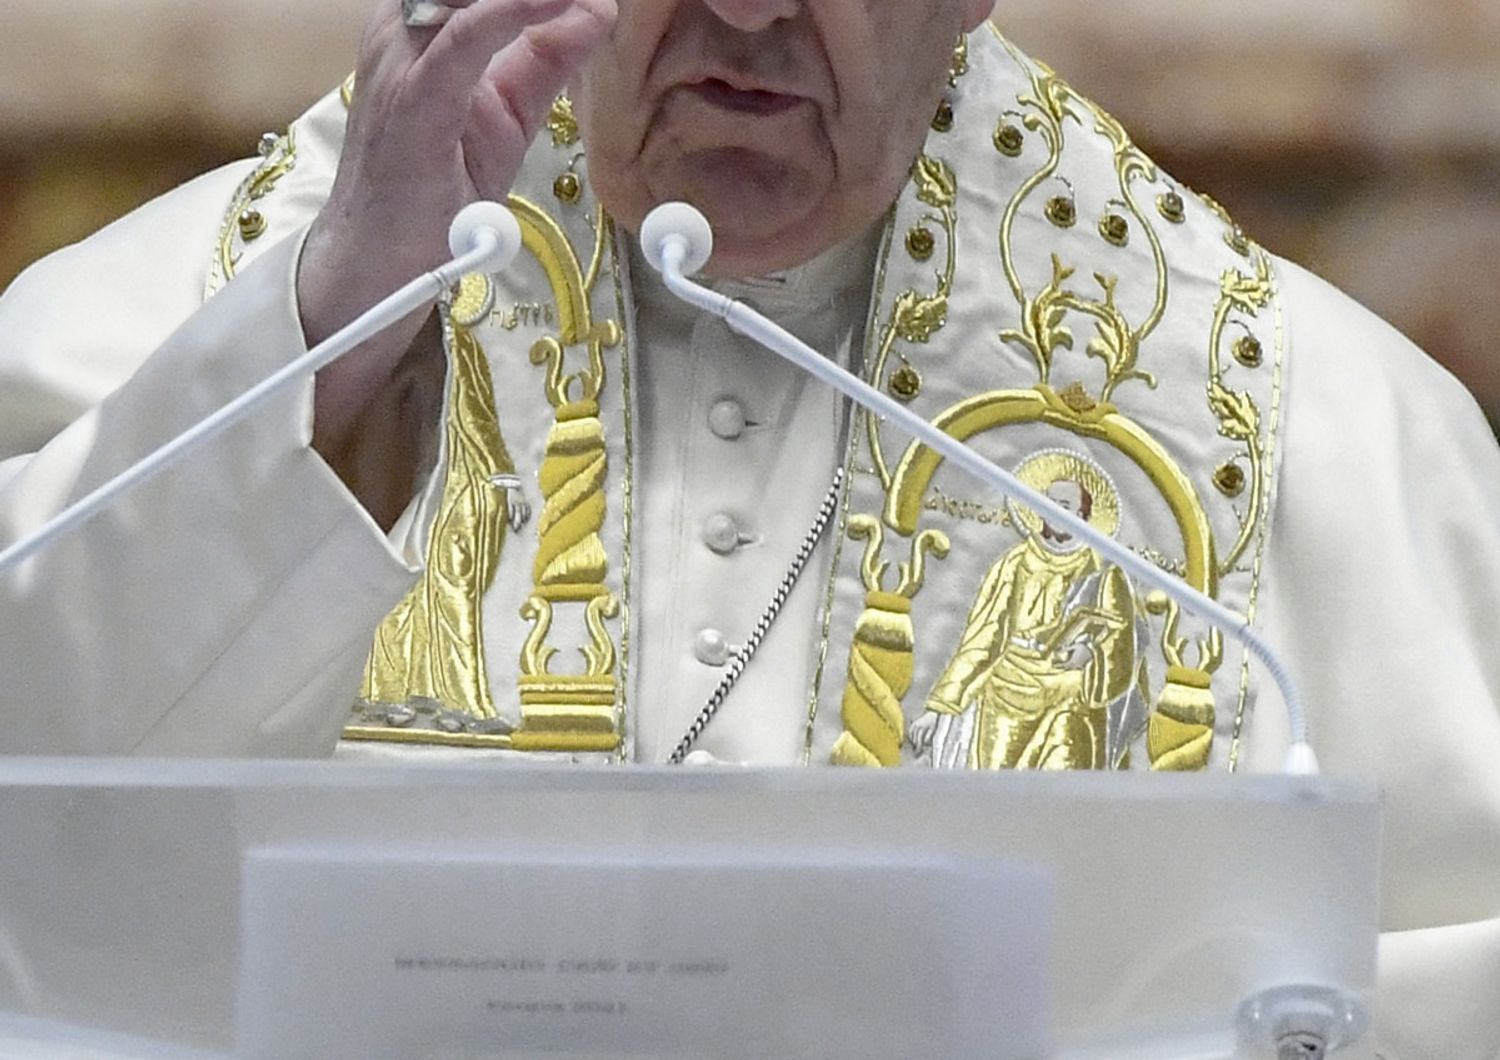 La benedizione 'Urbi et Orbi' di Papa Francesco